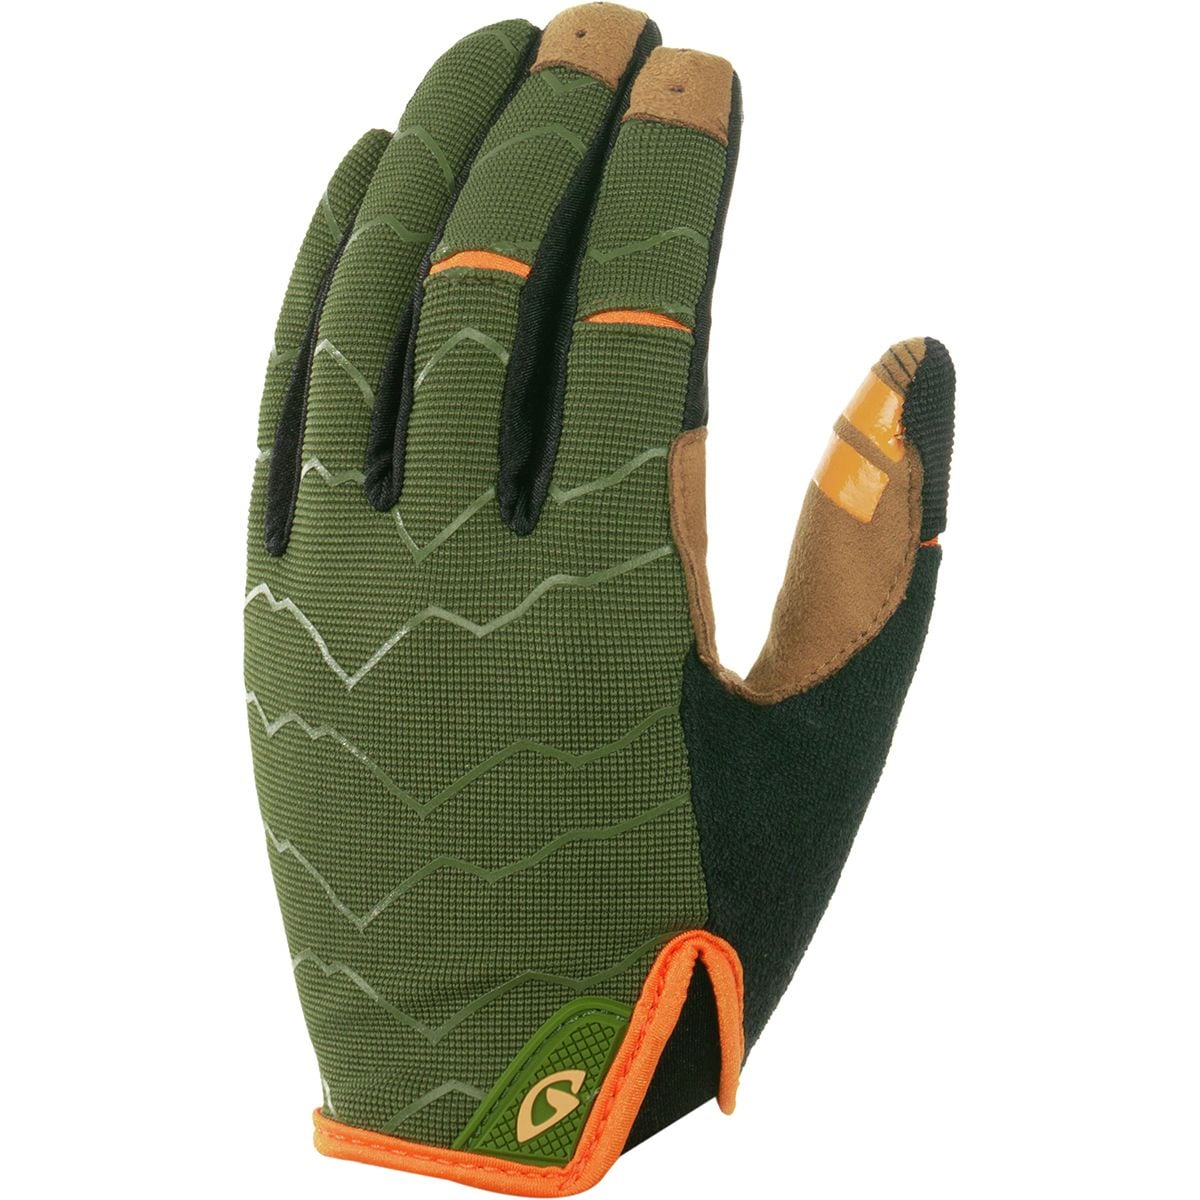 Giro DND Limited Edition Glove - Men's